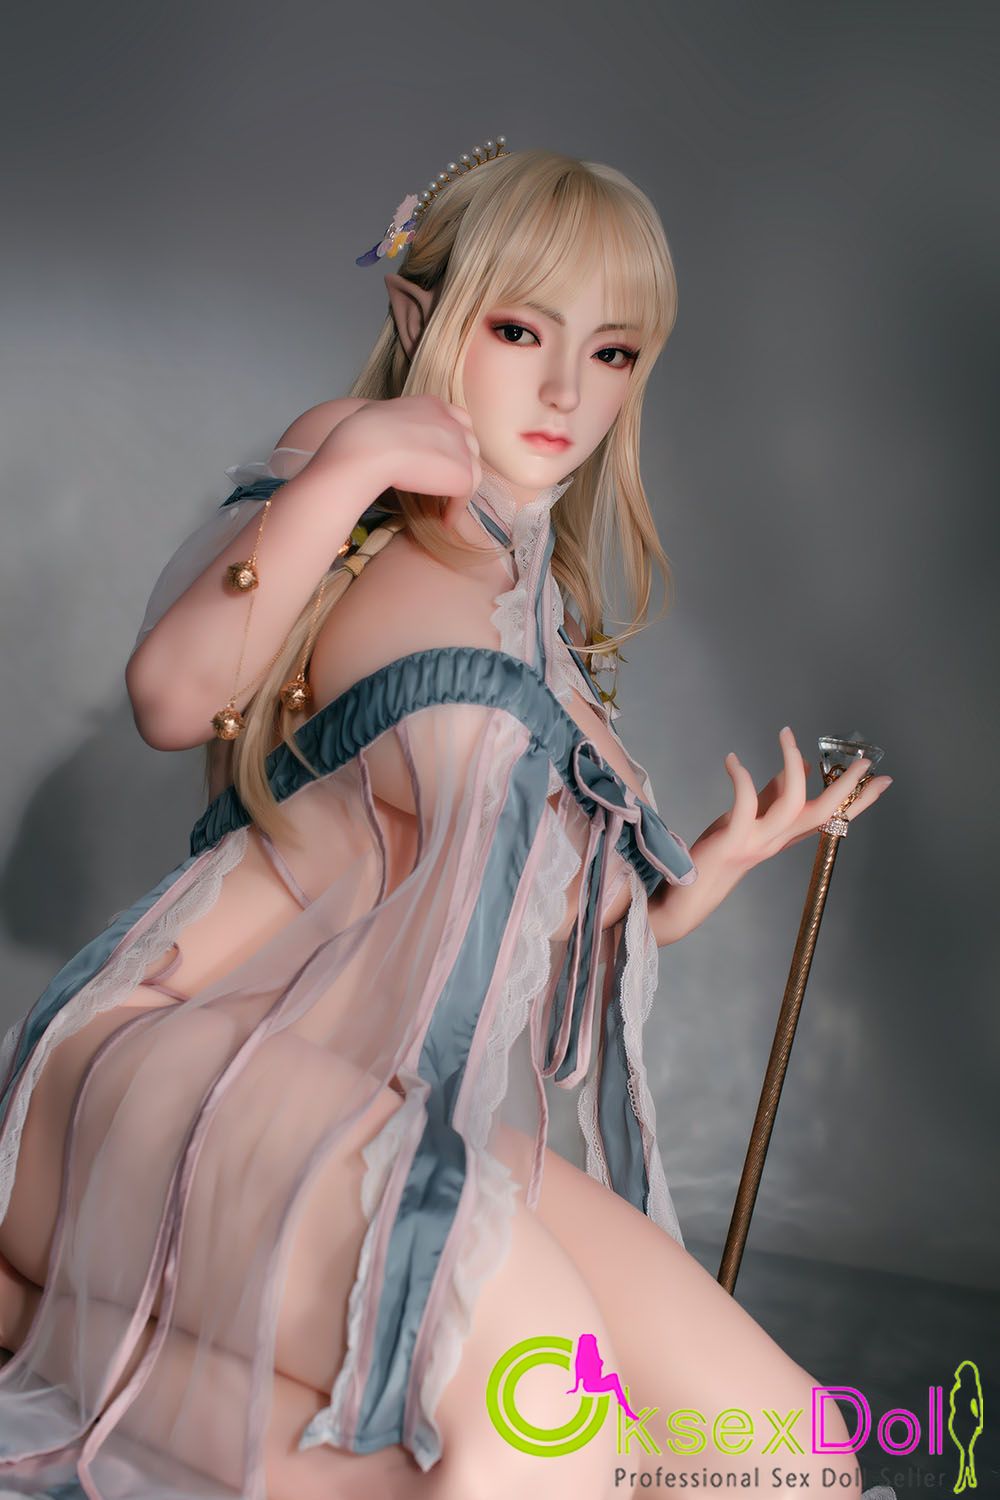 Fantasy sex doll photos of Angel